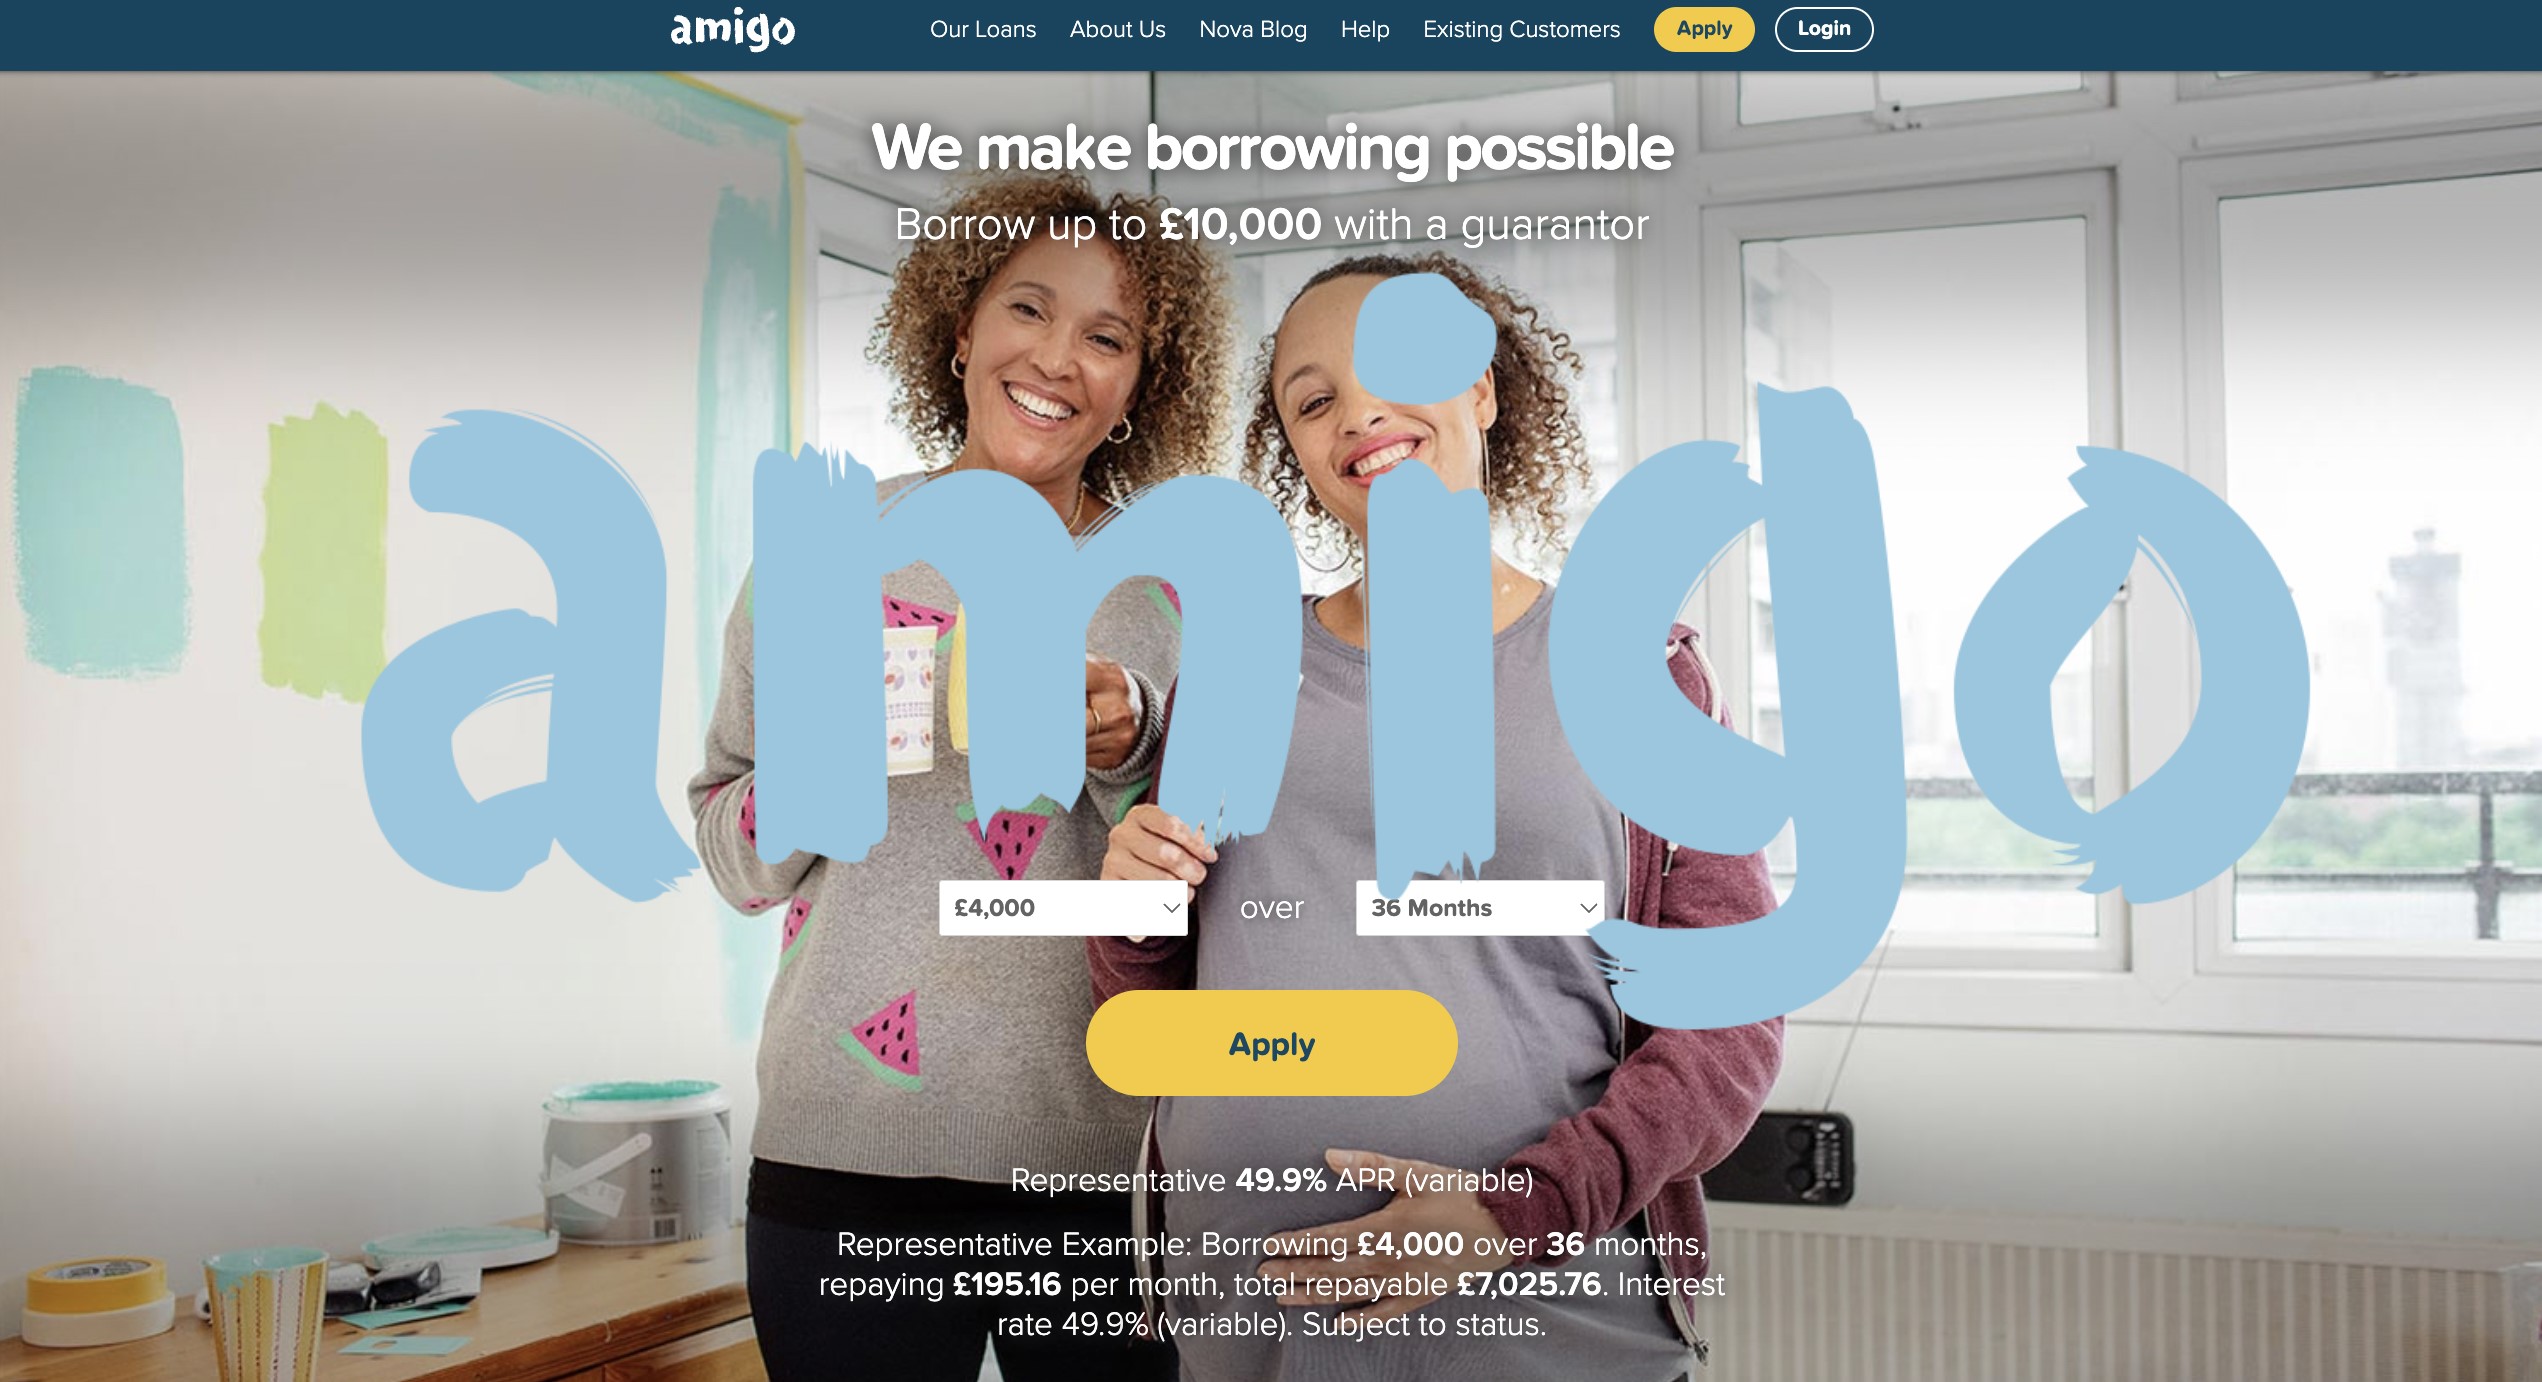 Amigo Loans to resume lending under new name!